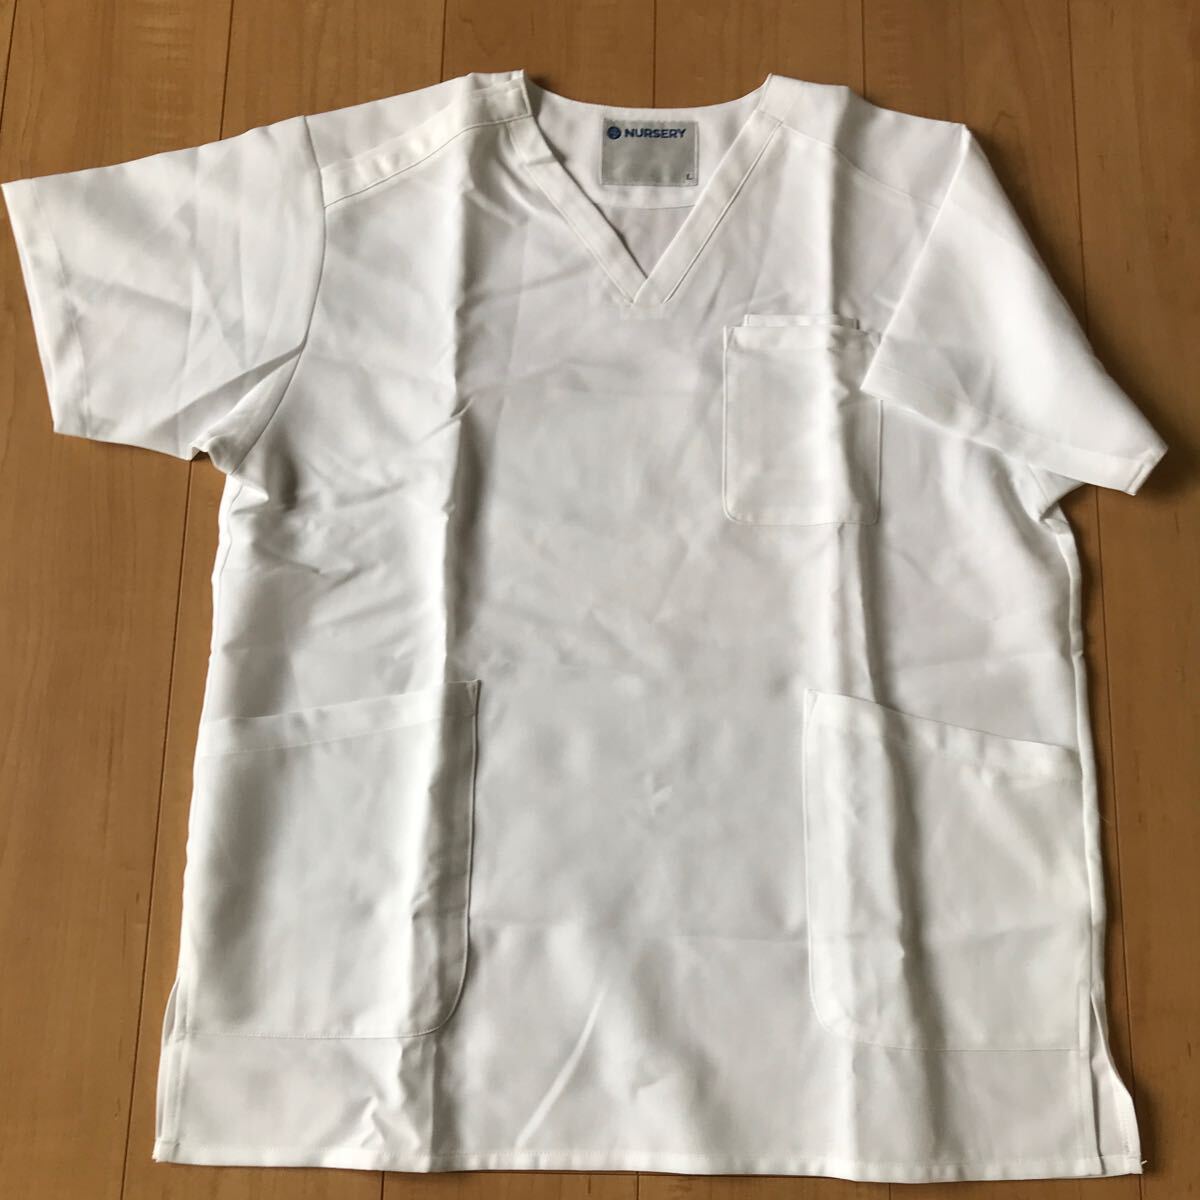  белый халат медсестра L размер 